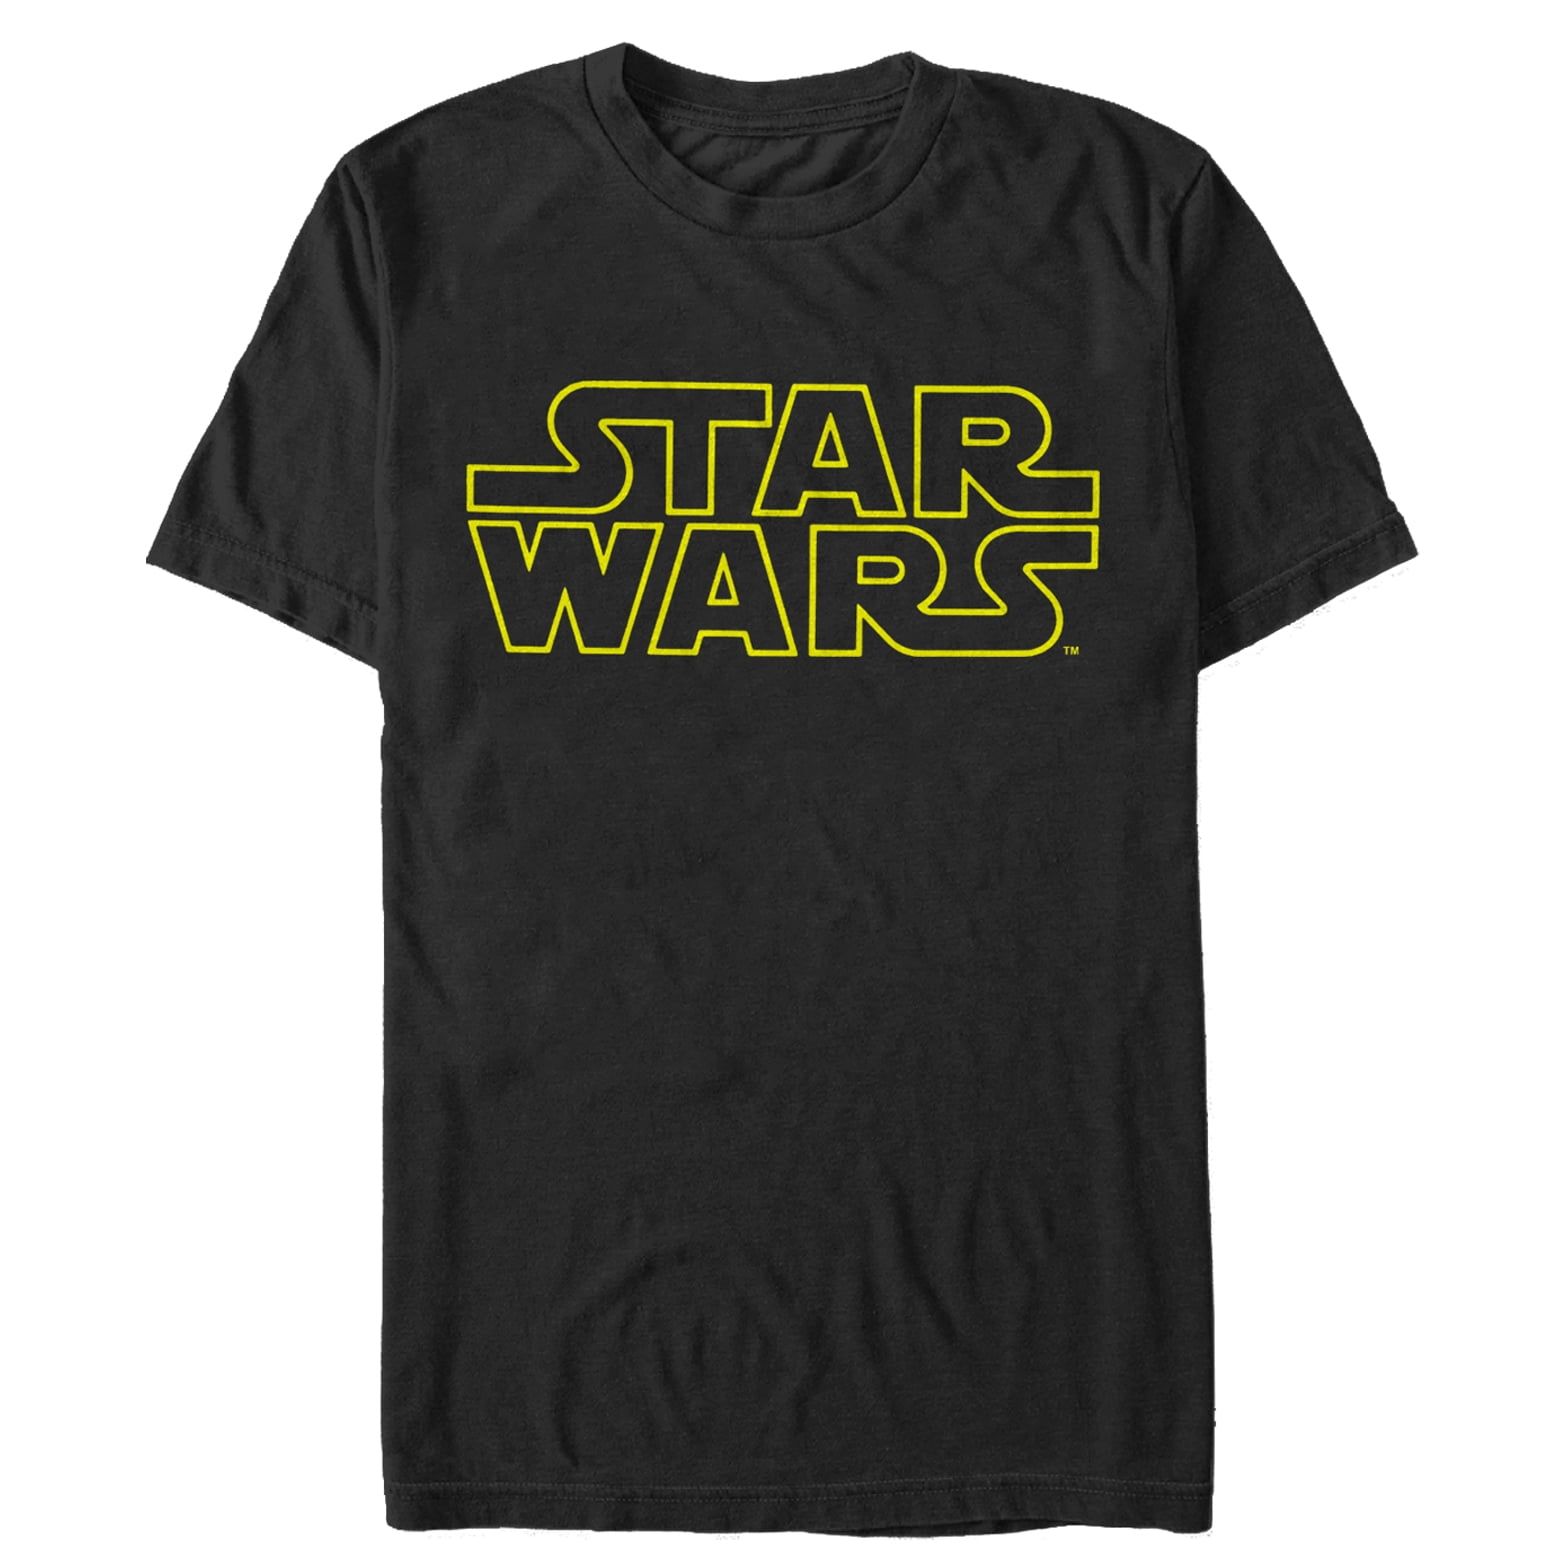 Star Wars movies Black T-shirt large